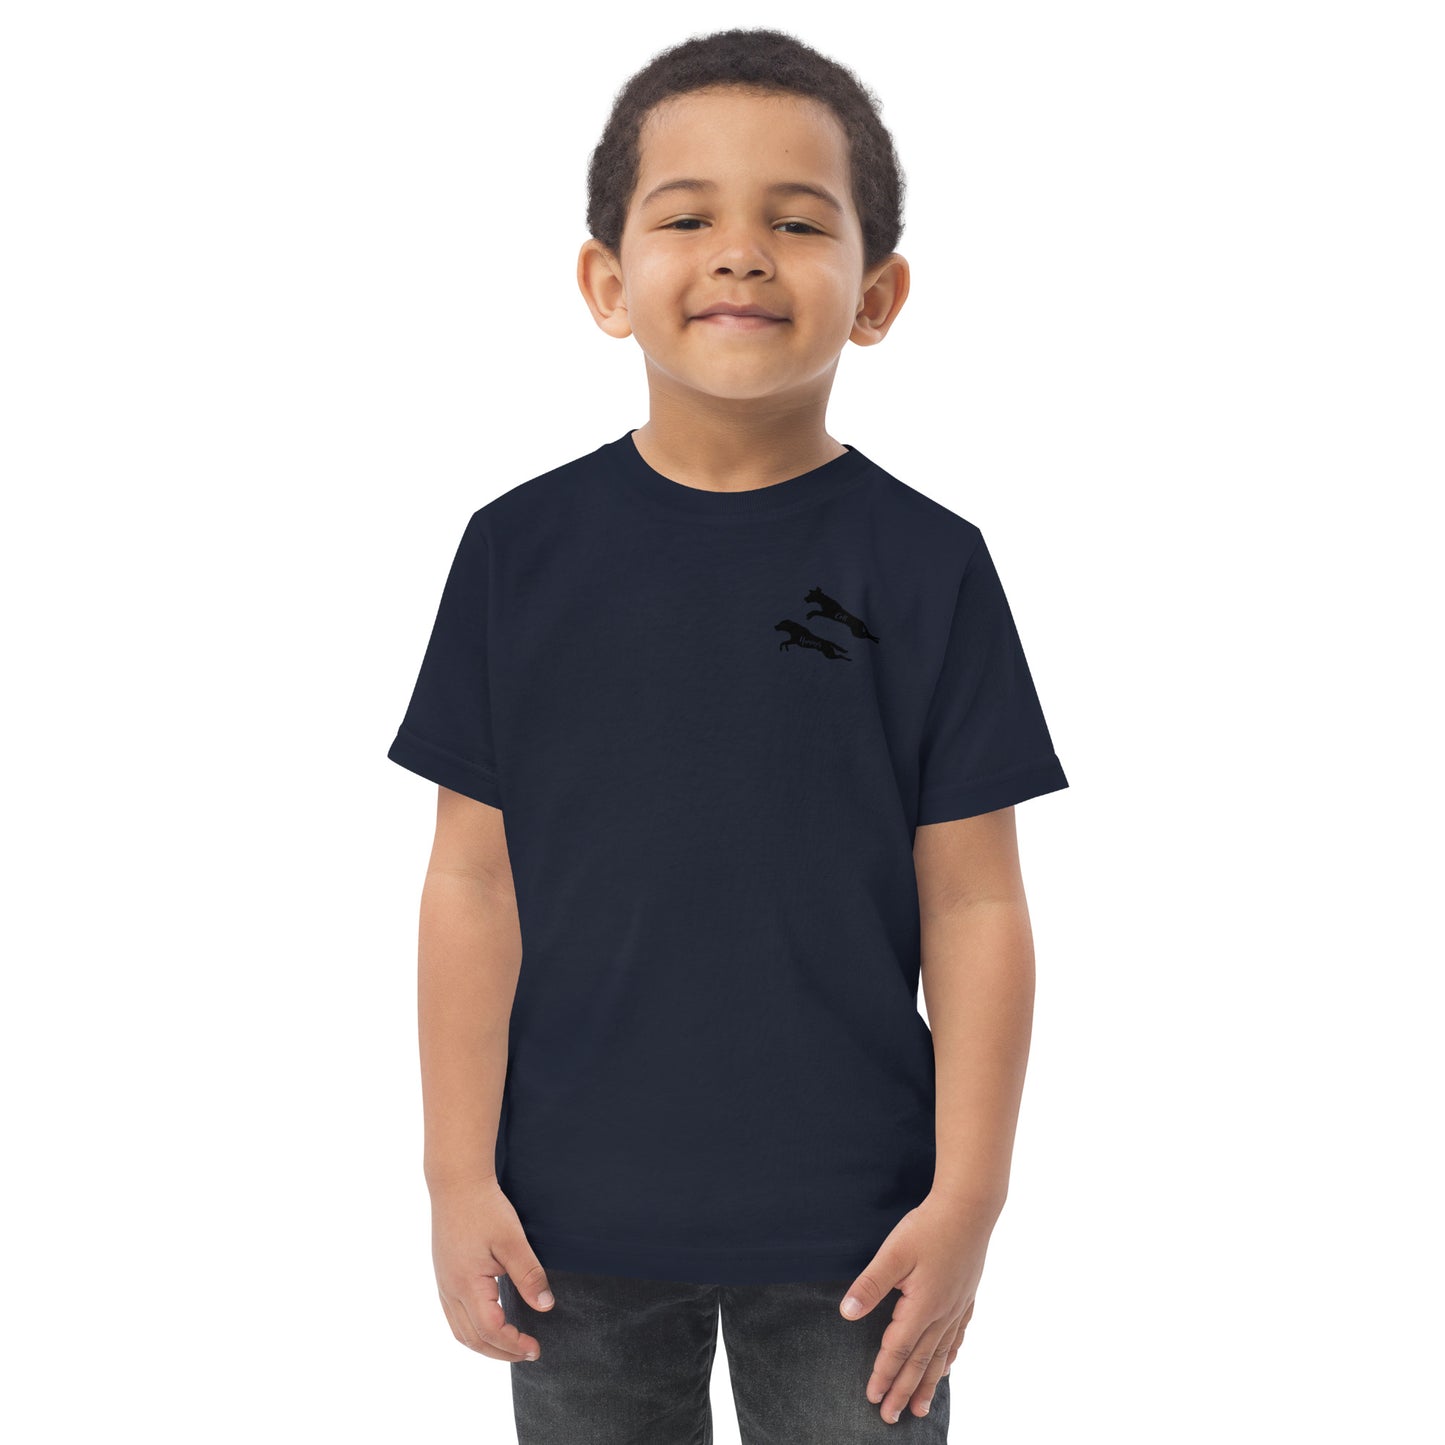 DUCKS & DOCKS Toddler jersey t-shirt